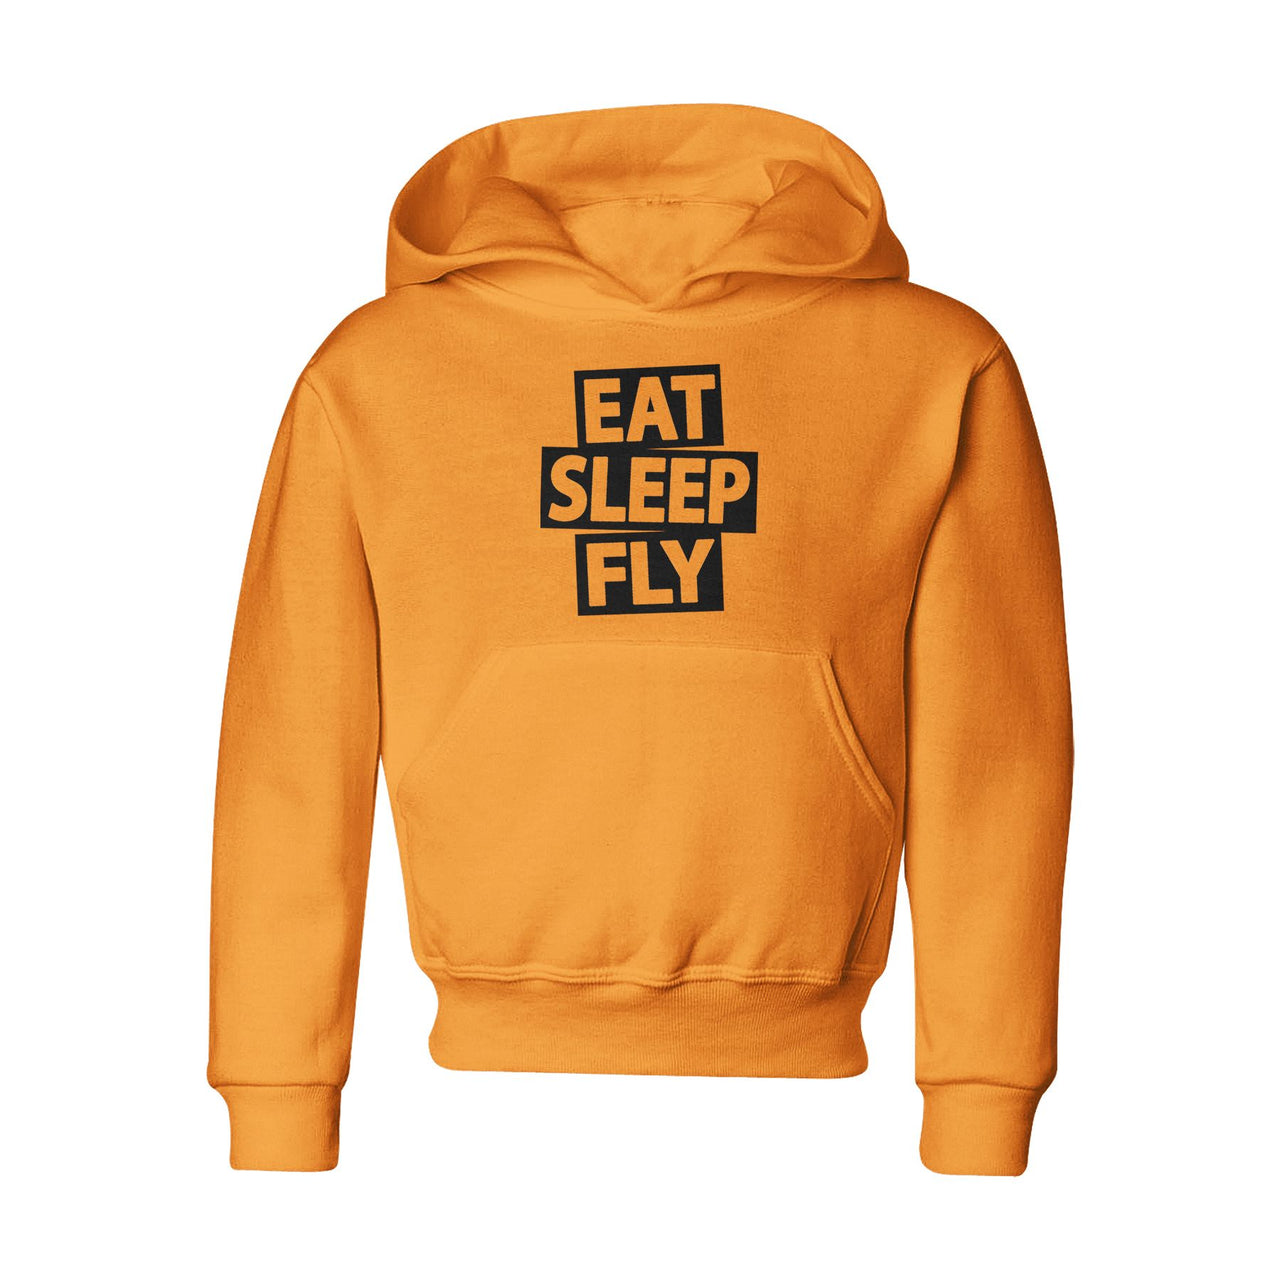 Eat Sleep Fly Designed "CHILDREN" Hoodies